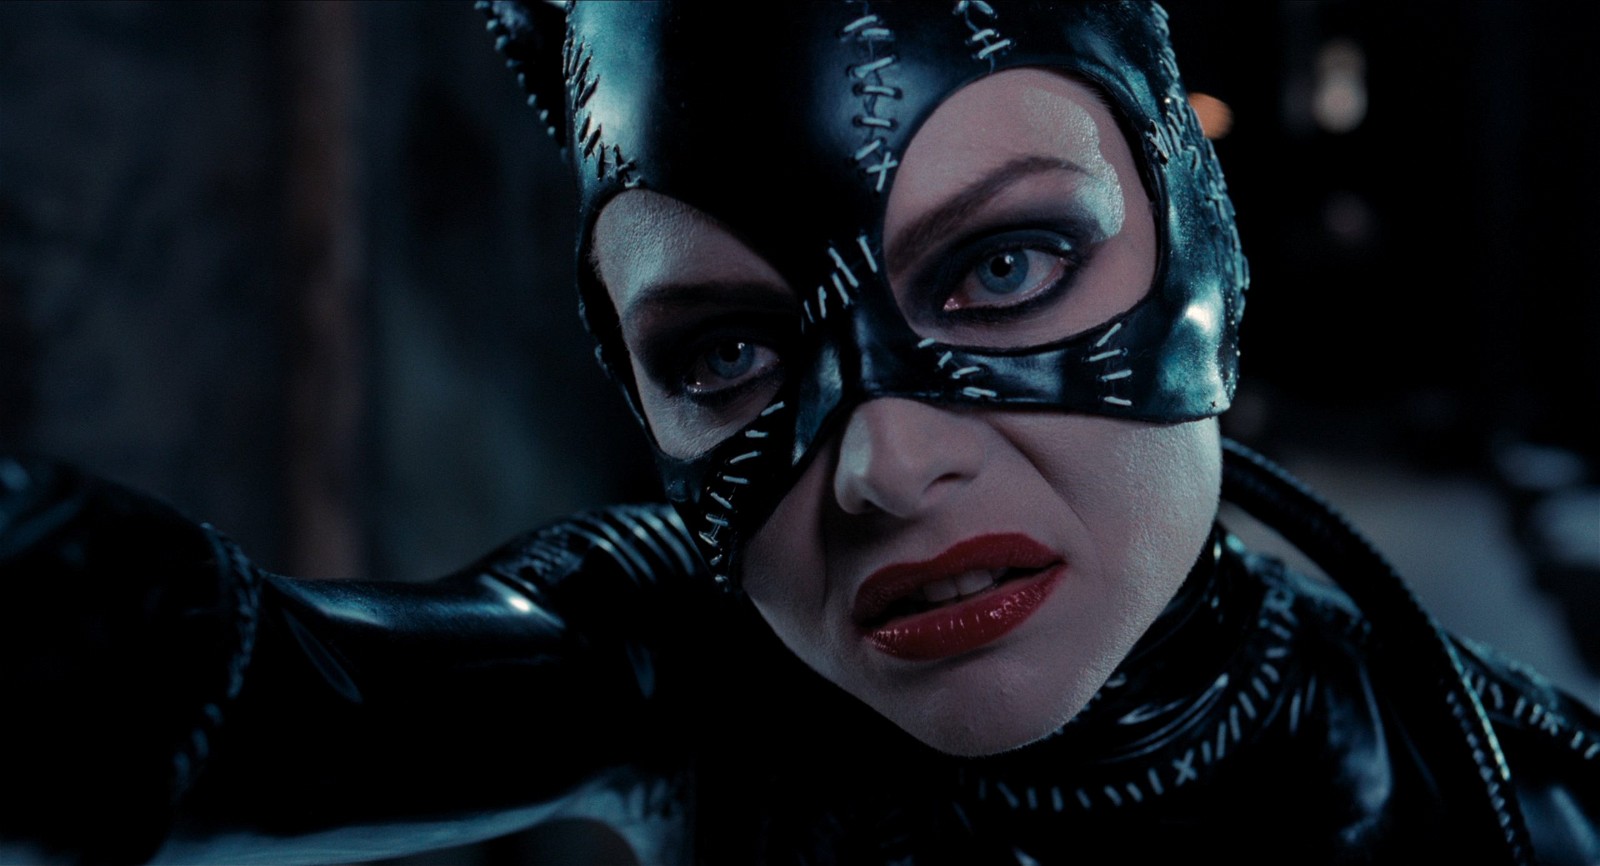 Batman Returns star Michelle Pfeiffer was studio's choice to play the lead in Basic Instinct